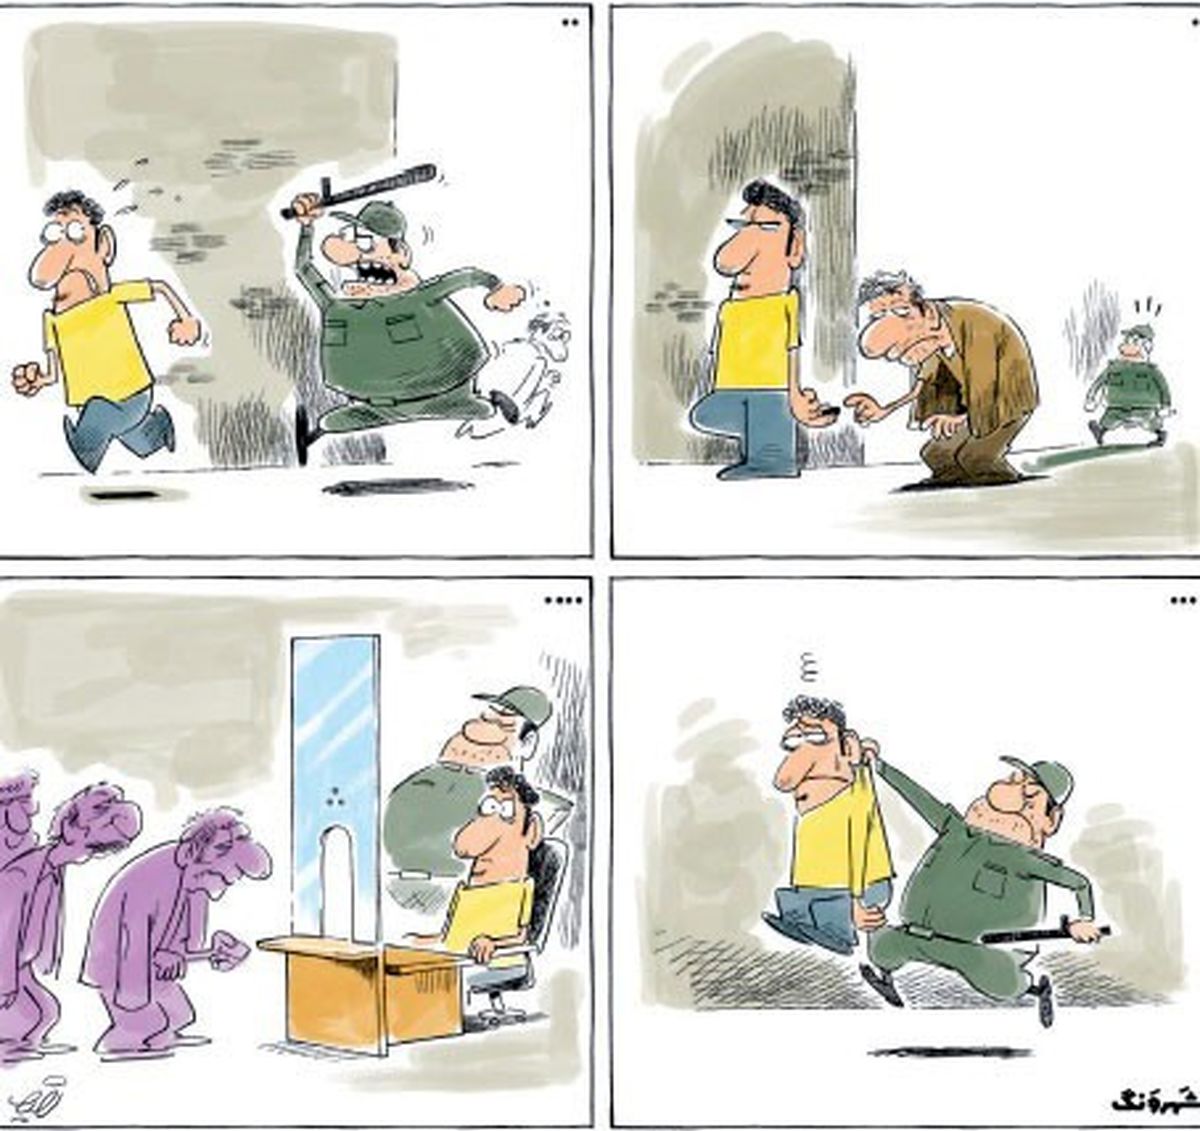 کارتون: شیوه توزیع تریاک دولتی مشخص شد!